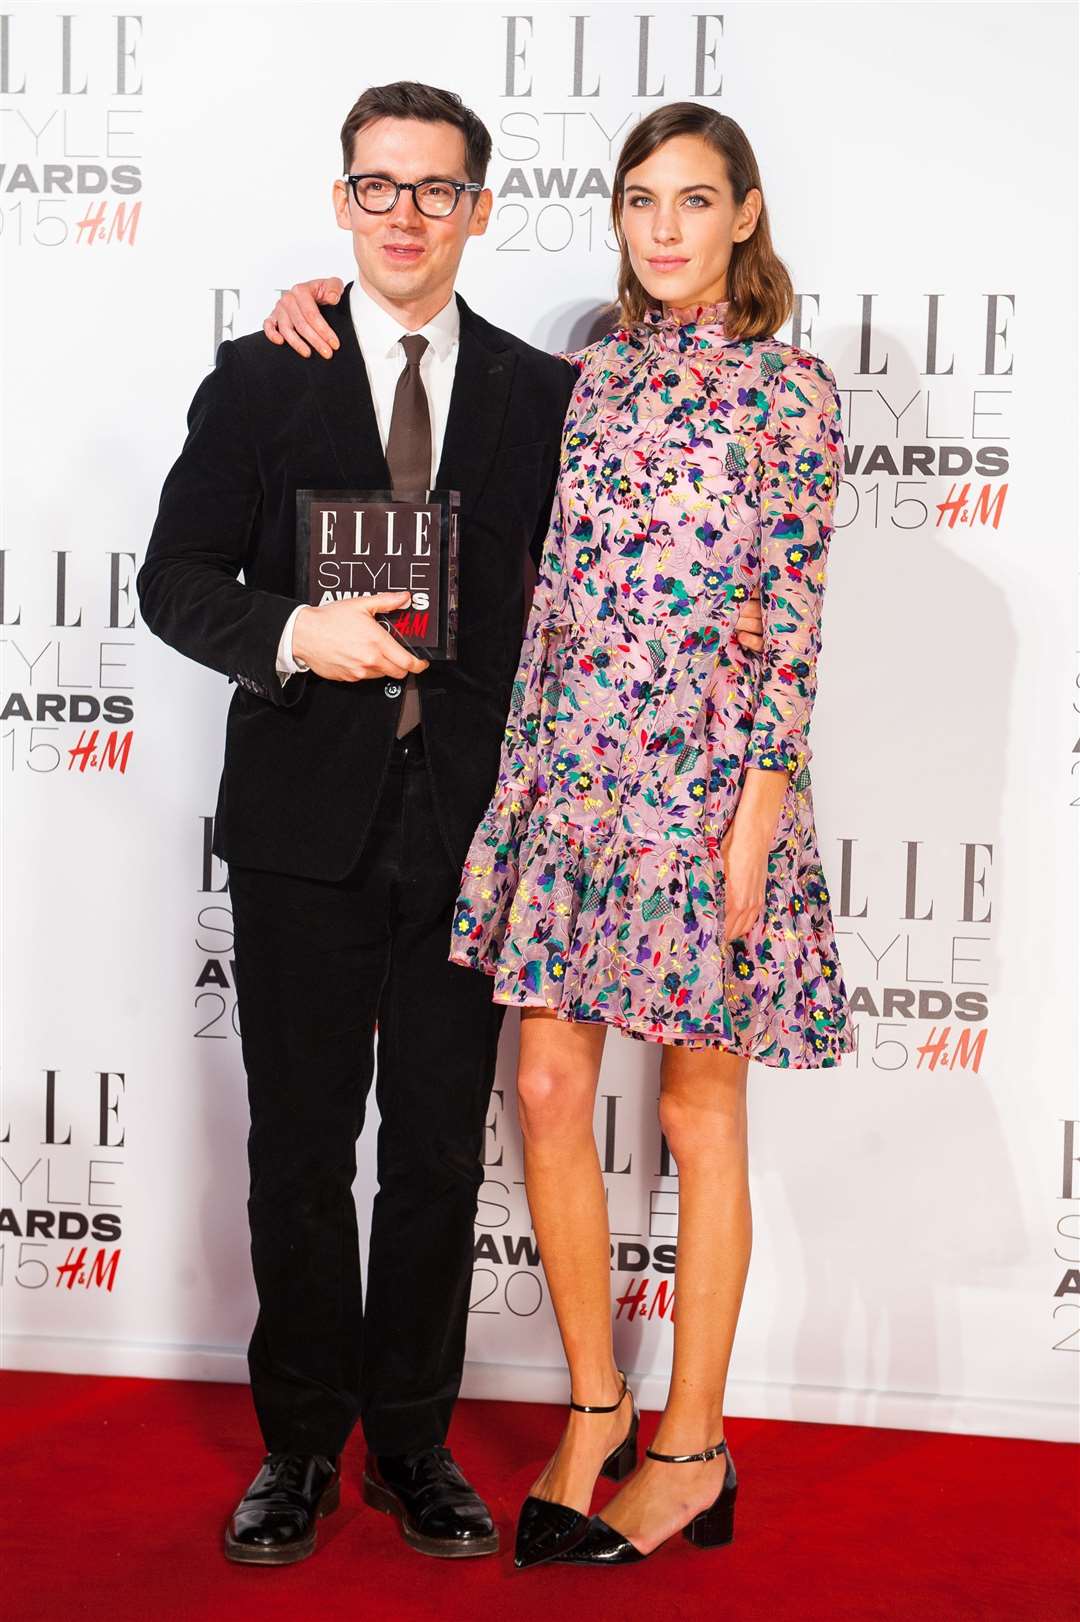 Erdem Moralioglu with Alexa Chung at the Elle Style Awards 2015 (Dominic Lipinski/PA)